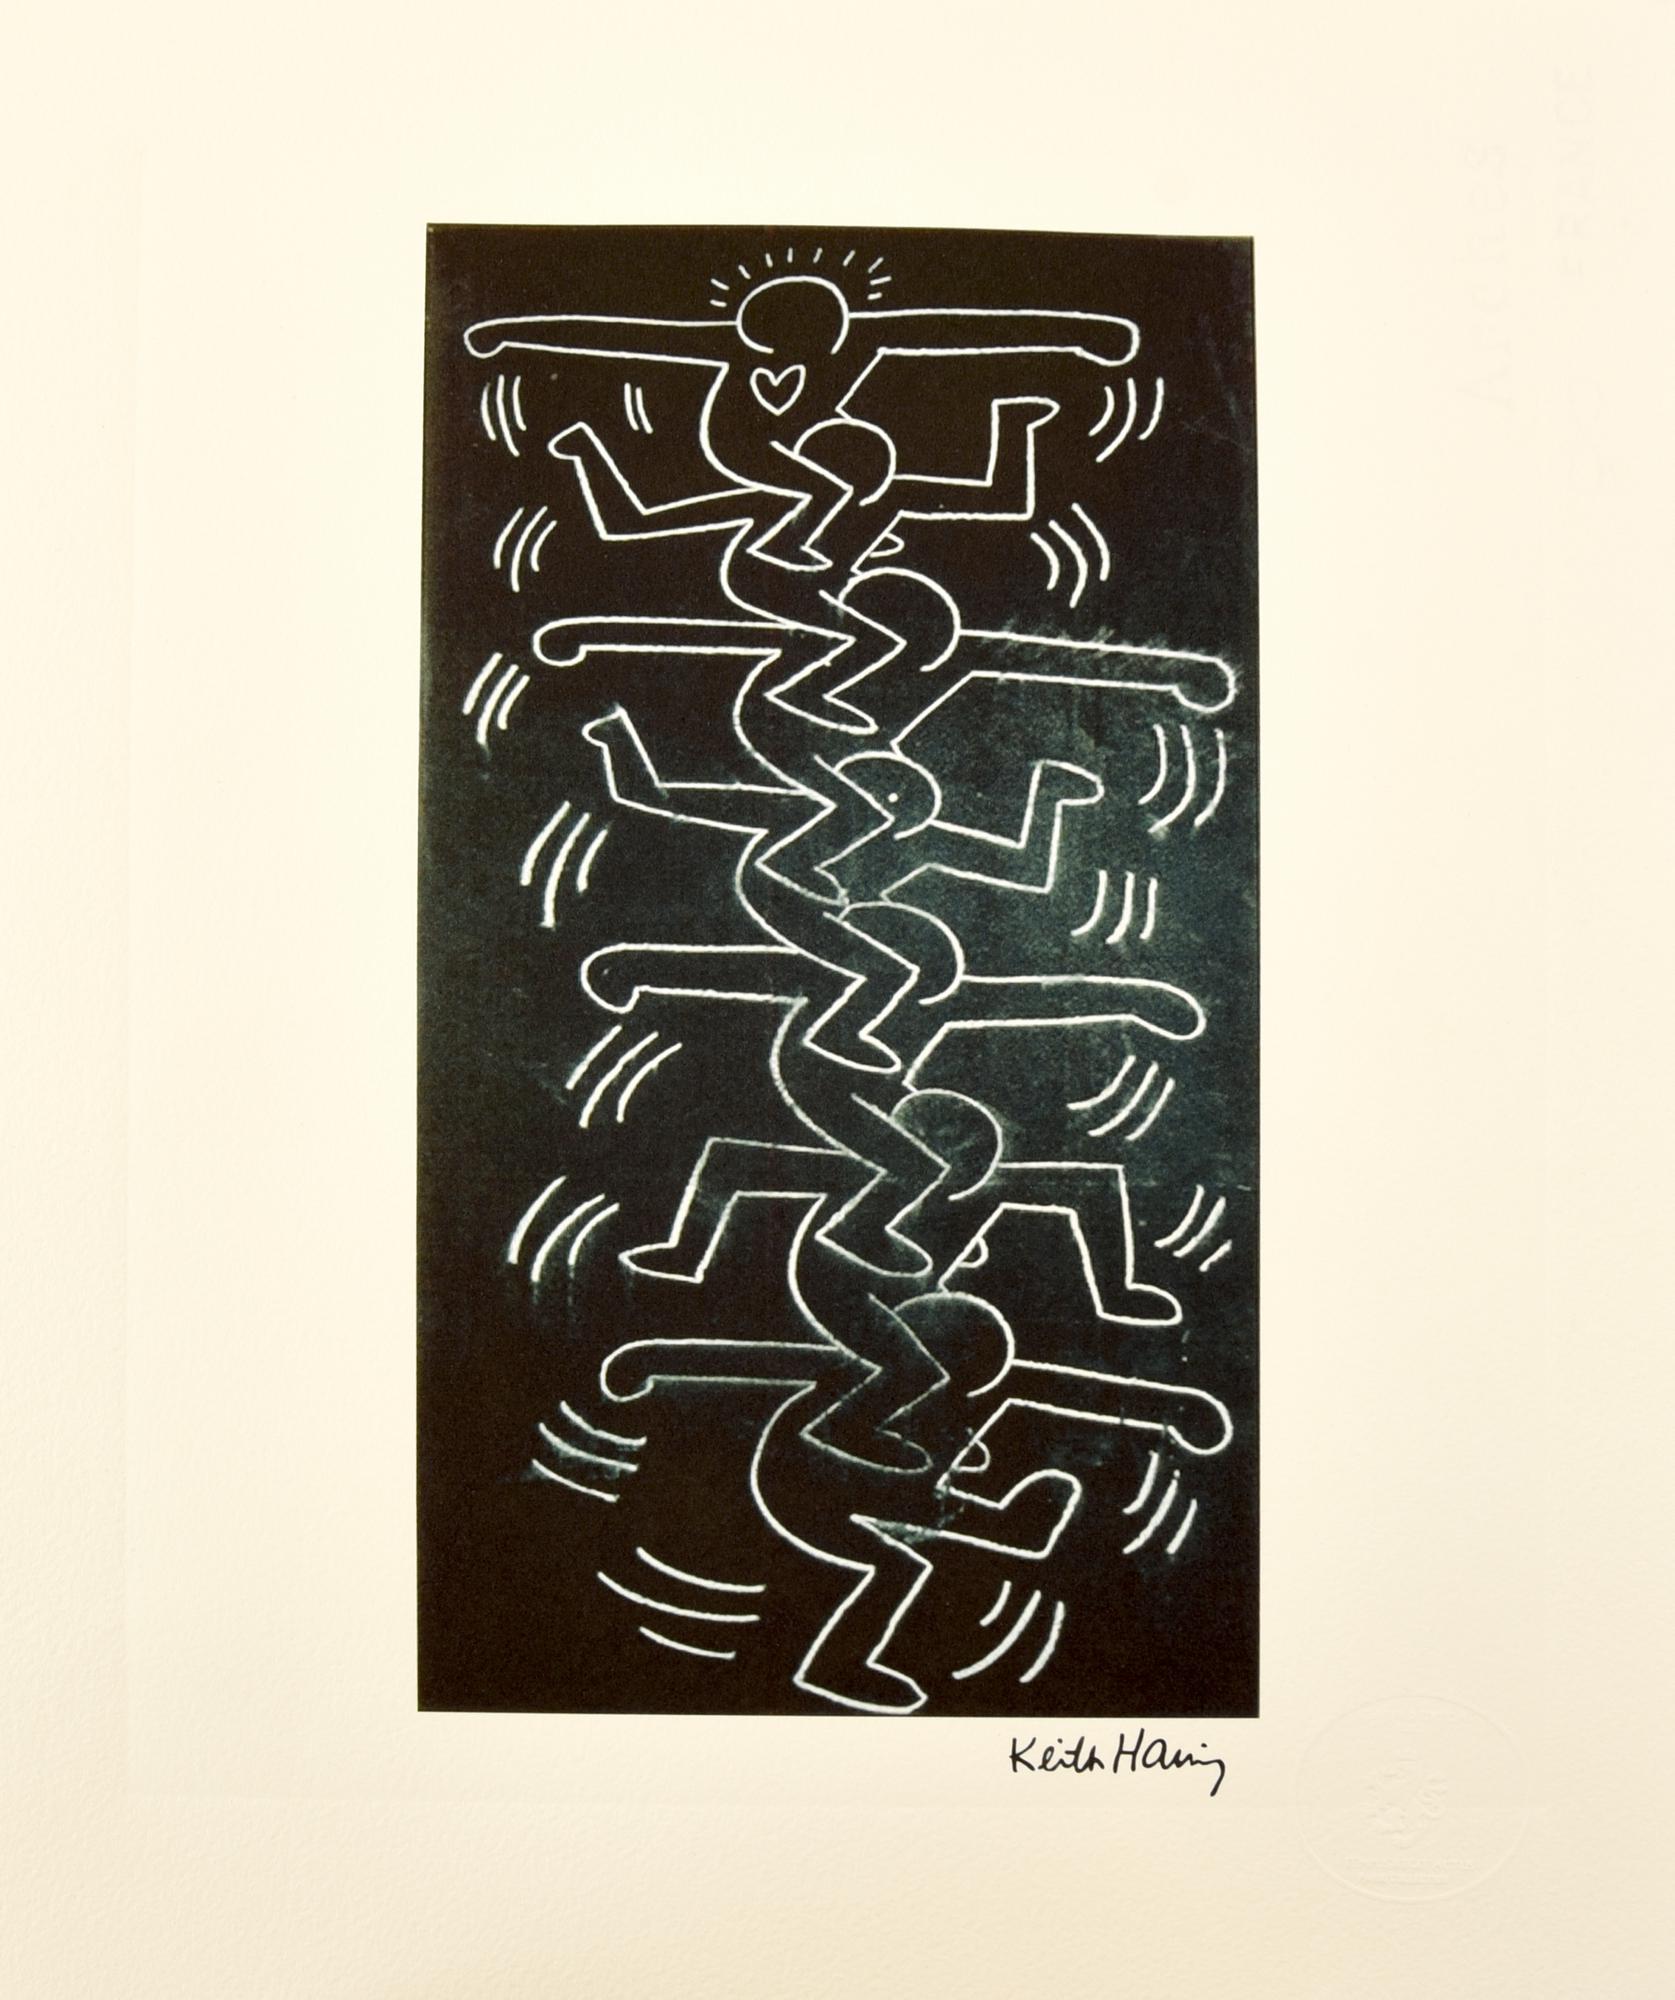 D'apres Keith Haring UNTITLED DA SUBWAY DRAWING 1985 eliografia su carta...